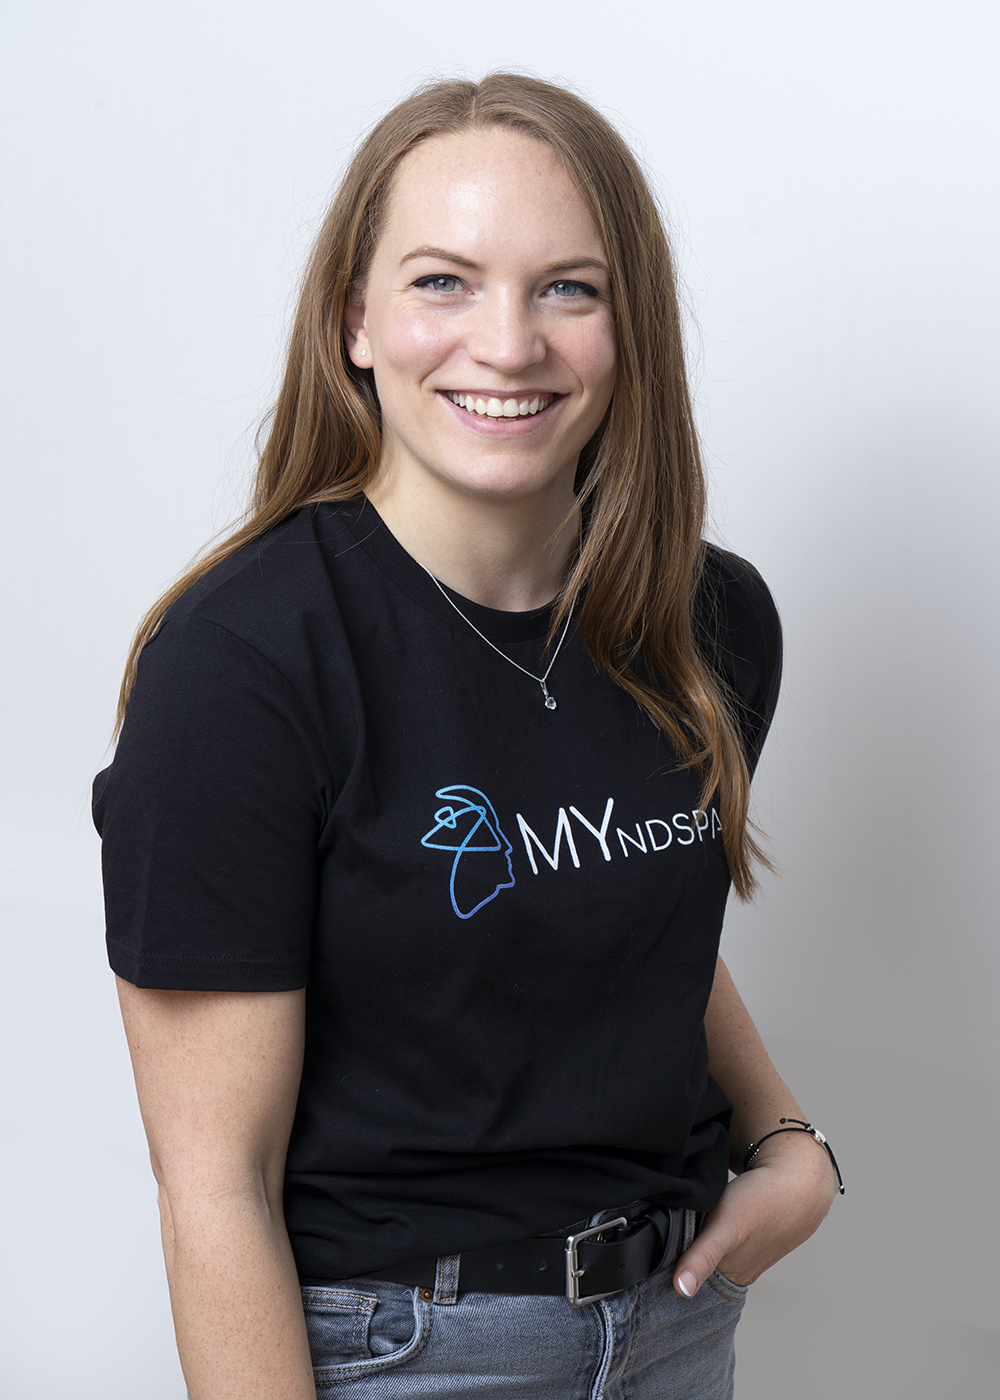 Caitlin Baltzer, co-founder and CEO of MYndspan